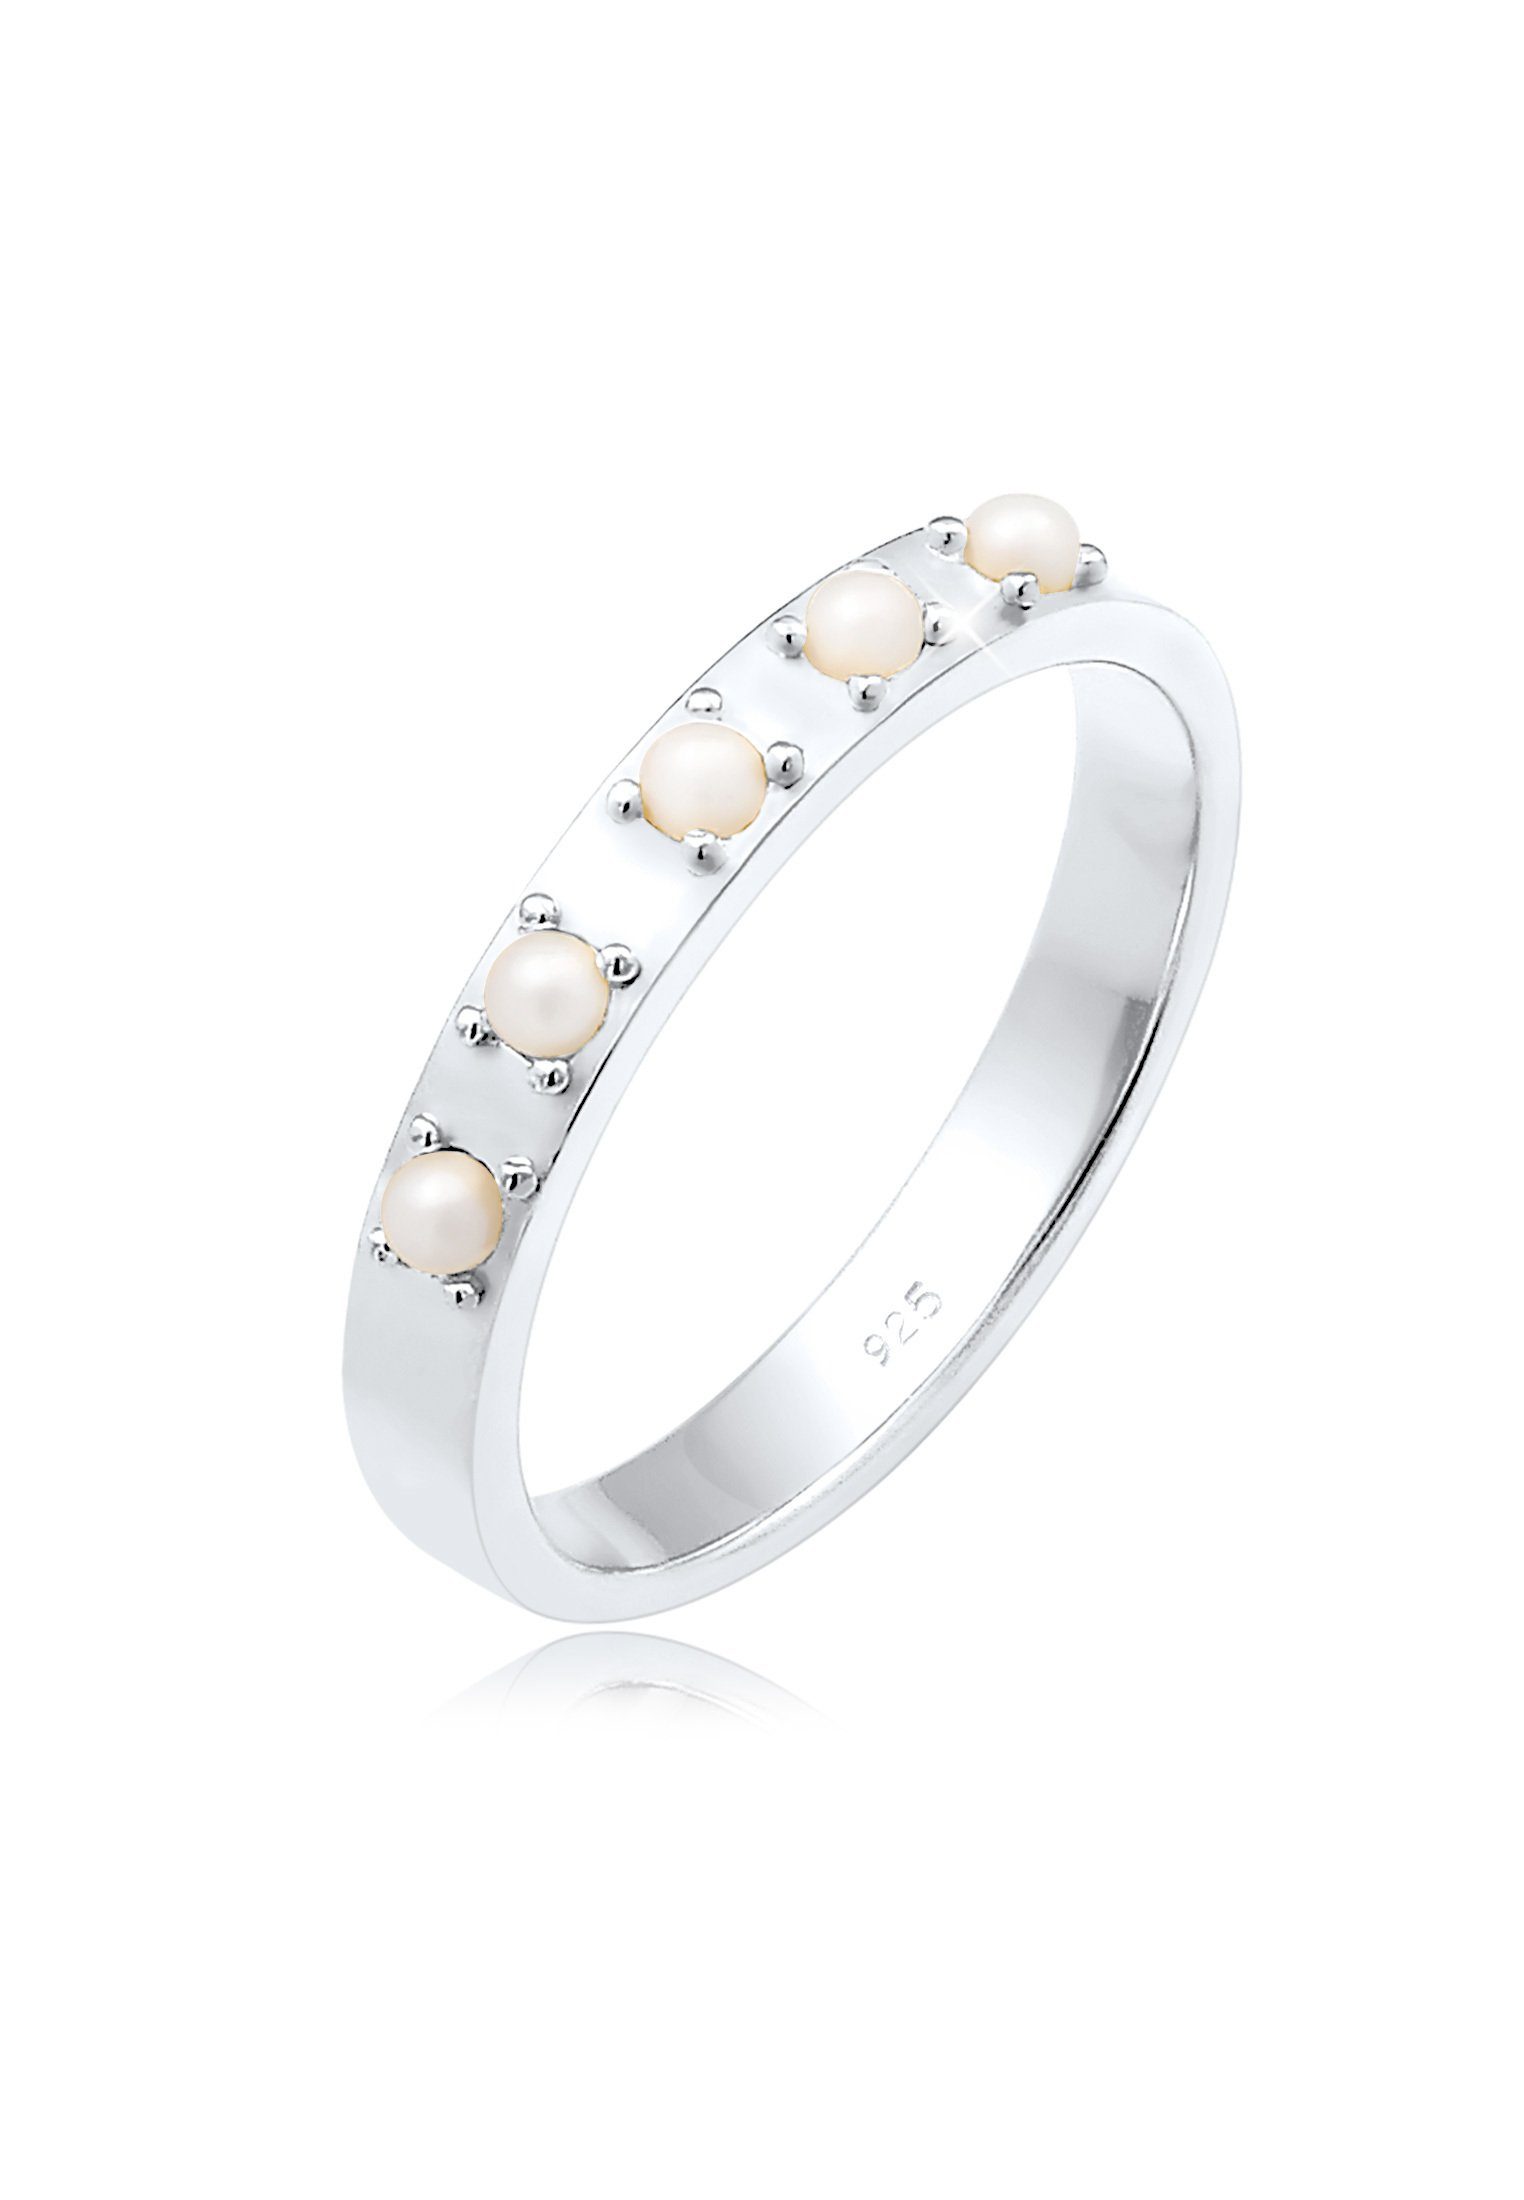 anlaufgeschützt Perlenring Bandring Silber, Silberschmuck und Perlen Elli hochglanzpoliert Synthetische 925